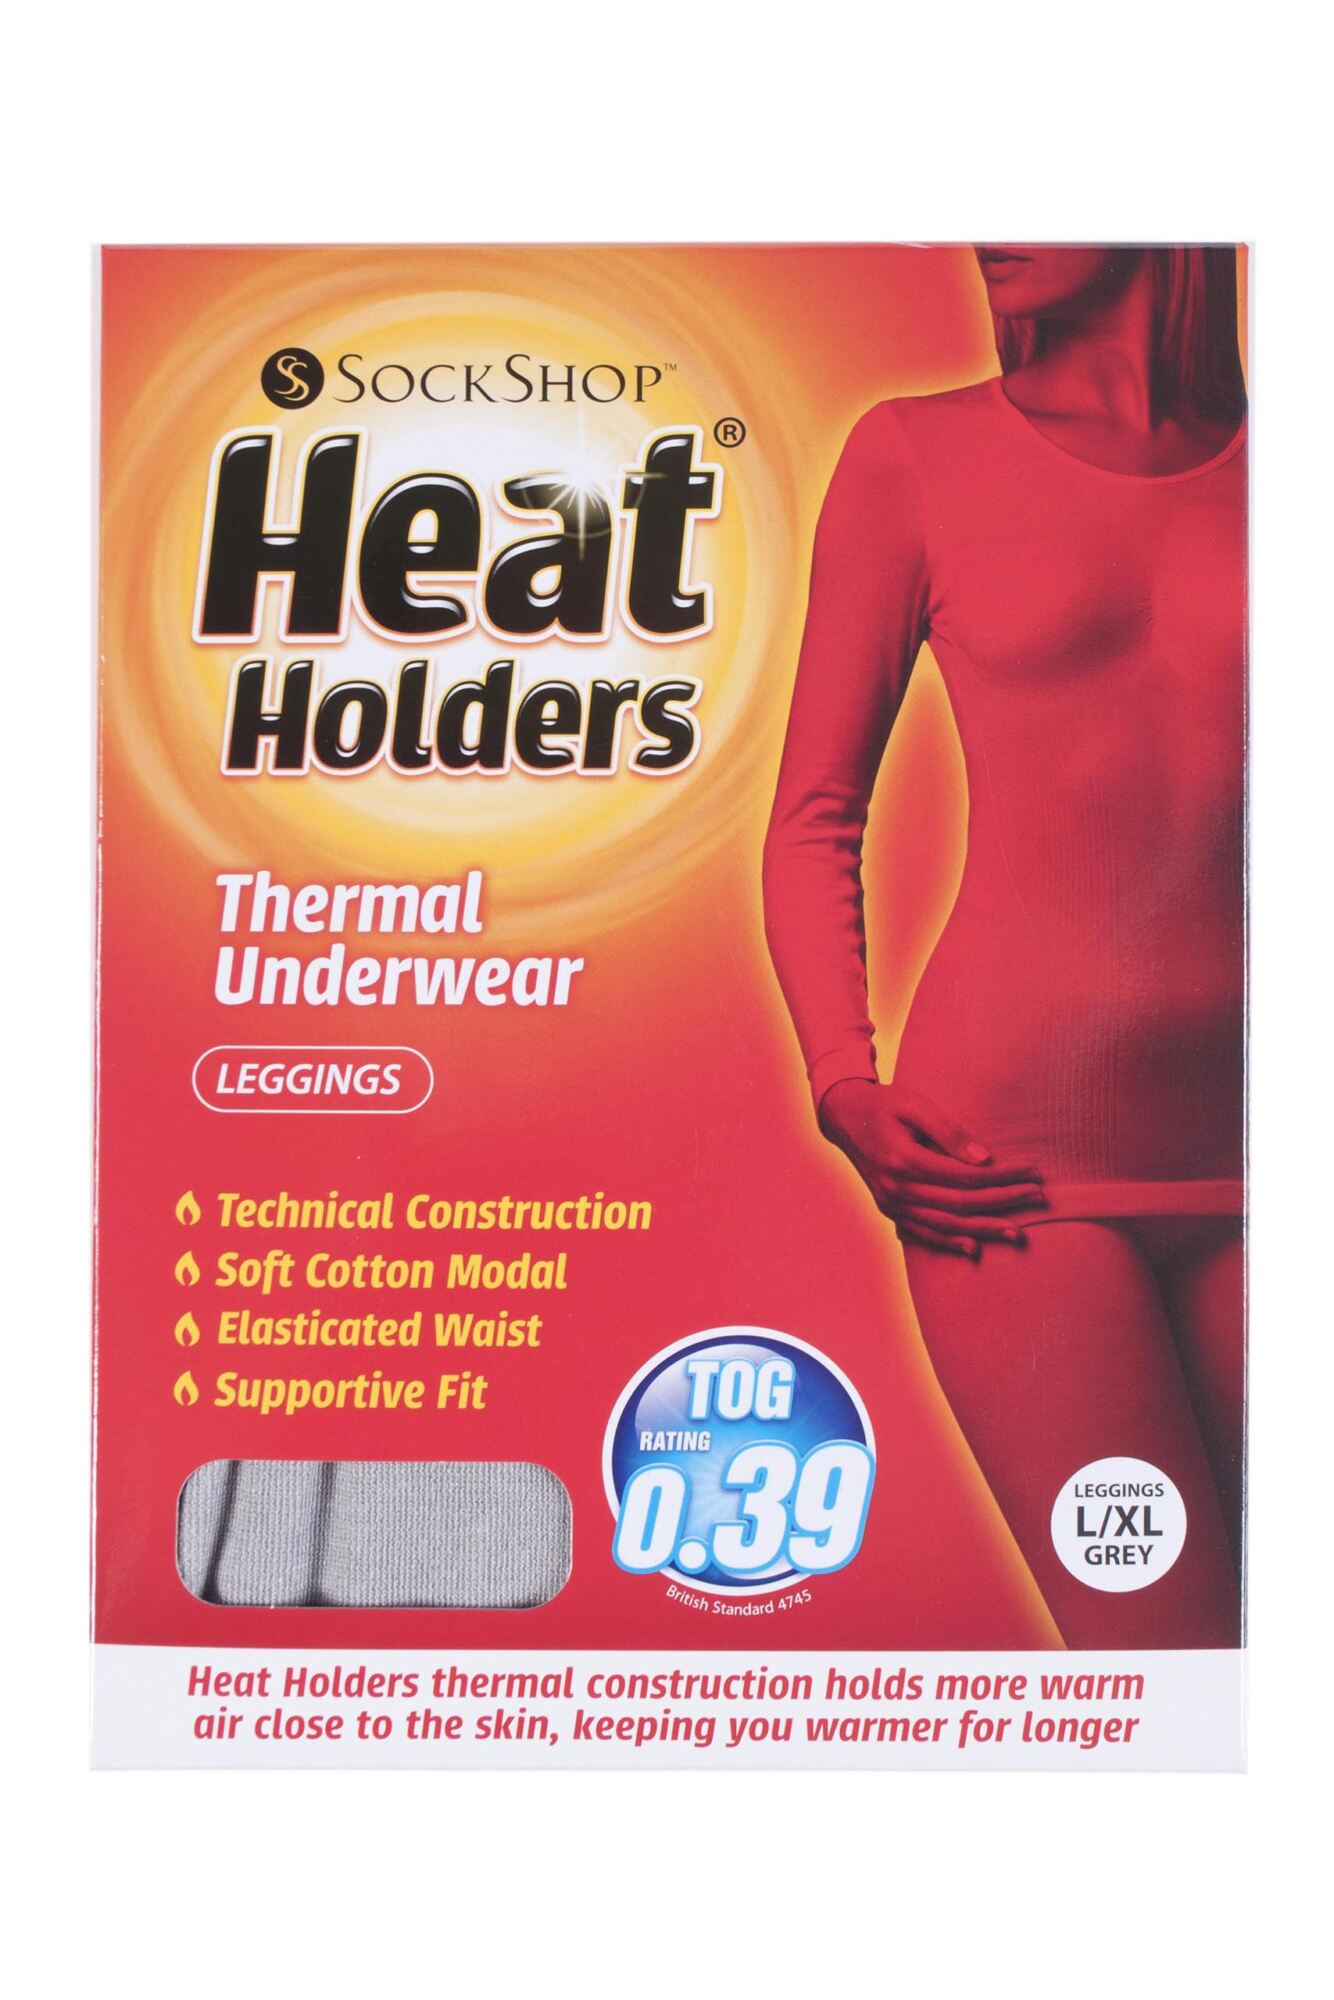 heat holders leggings size charter spectrum